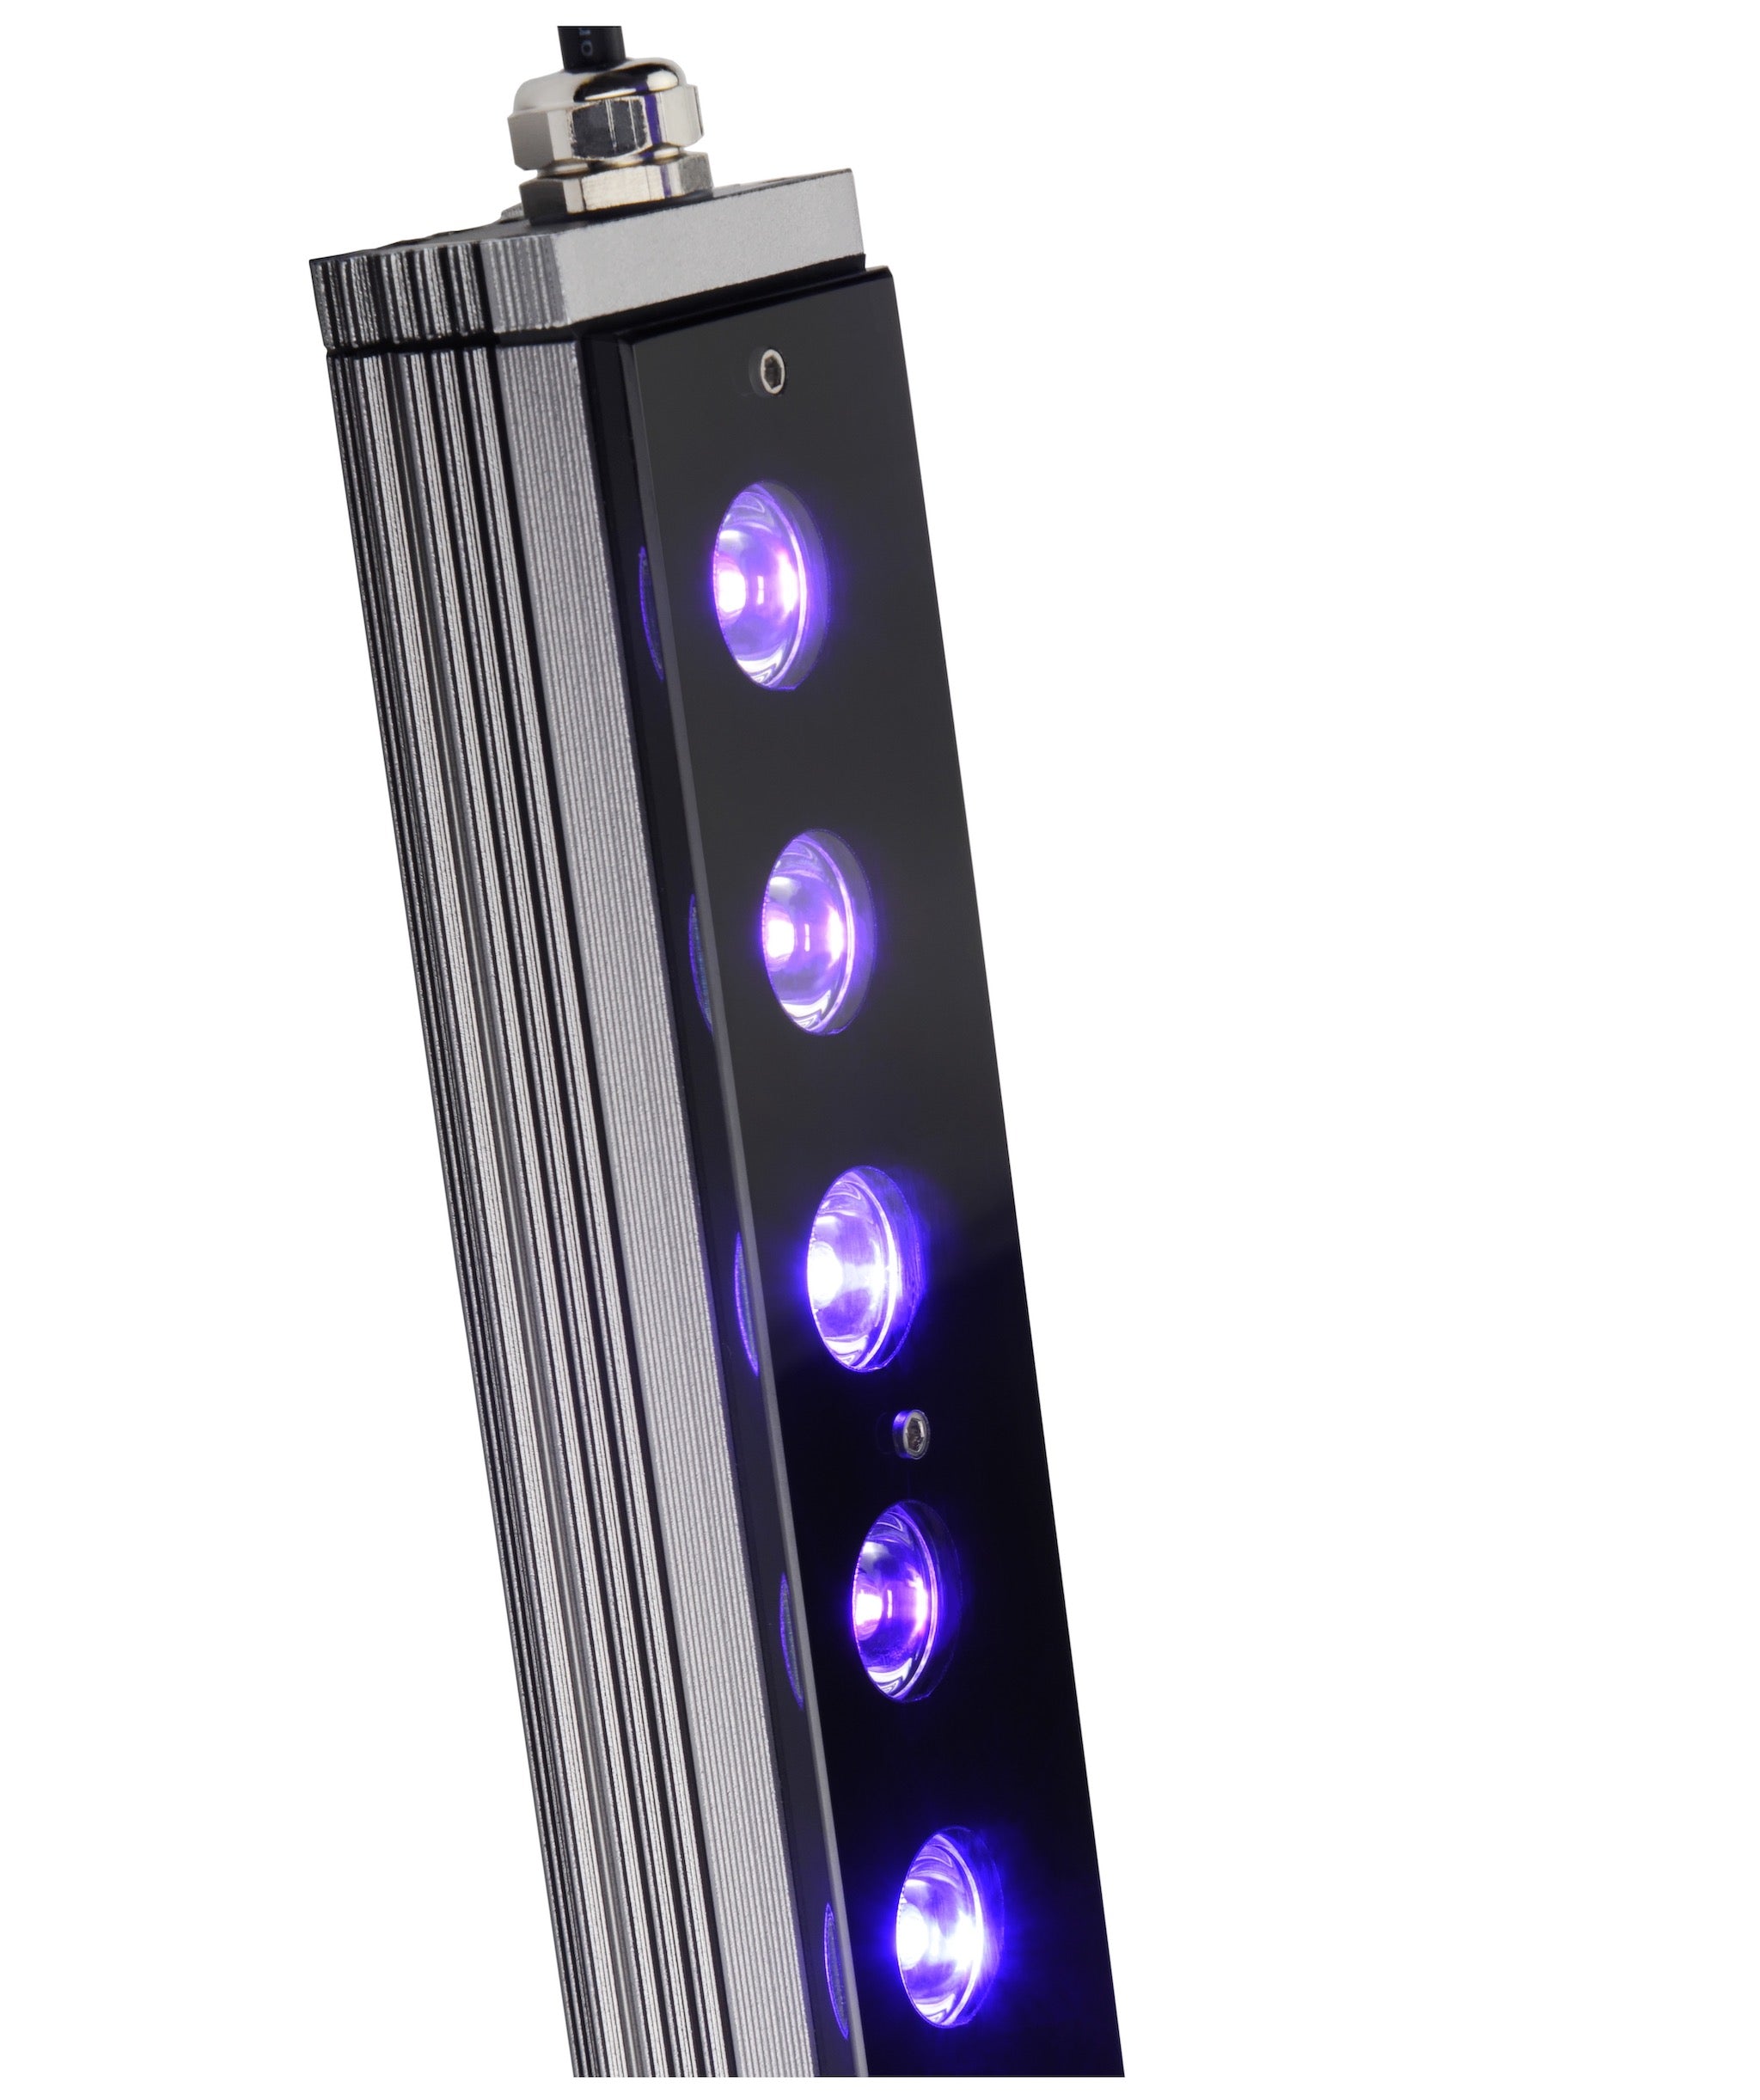 OR3 UV/Violet - Barre LED pour aquarium Reef